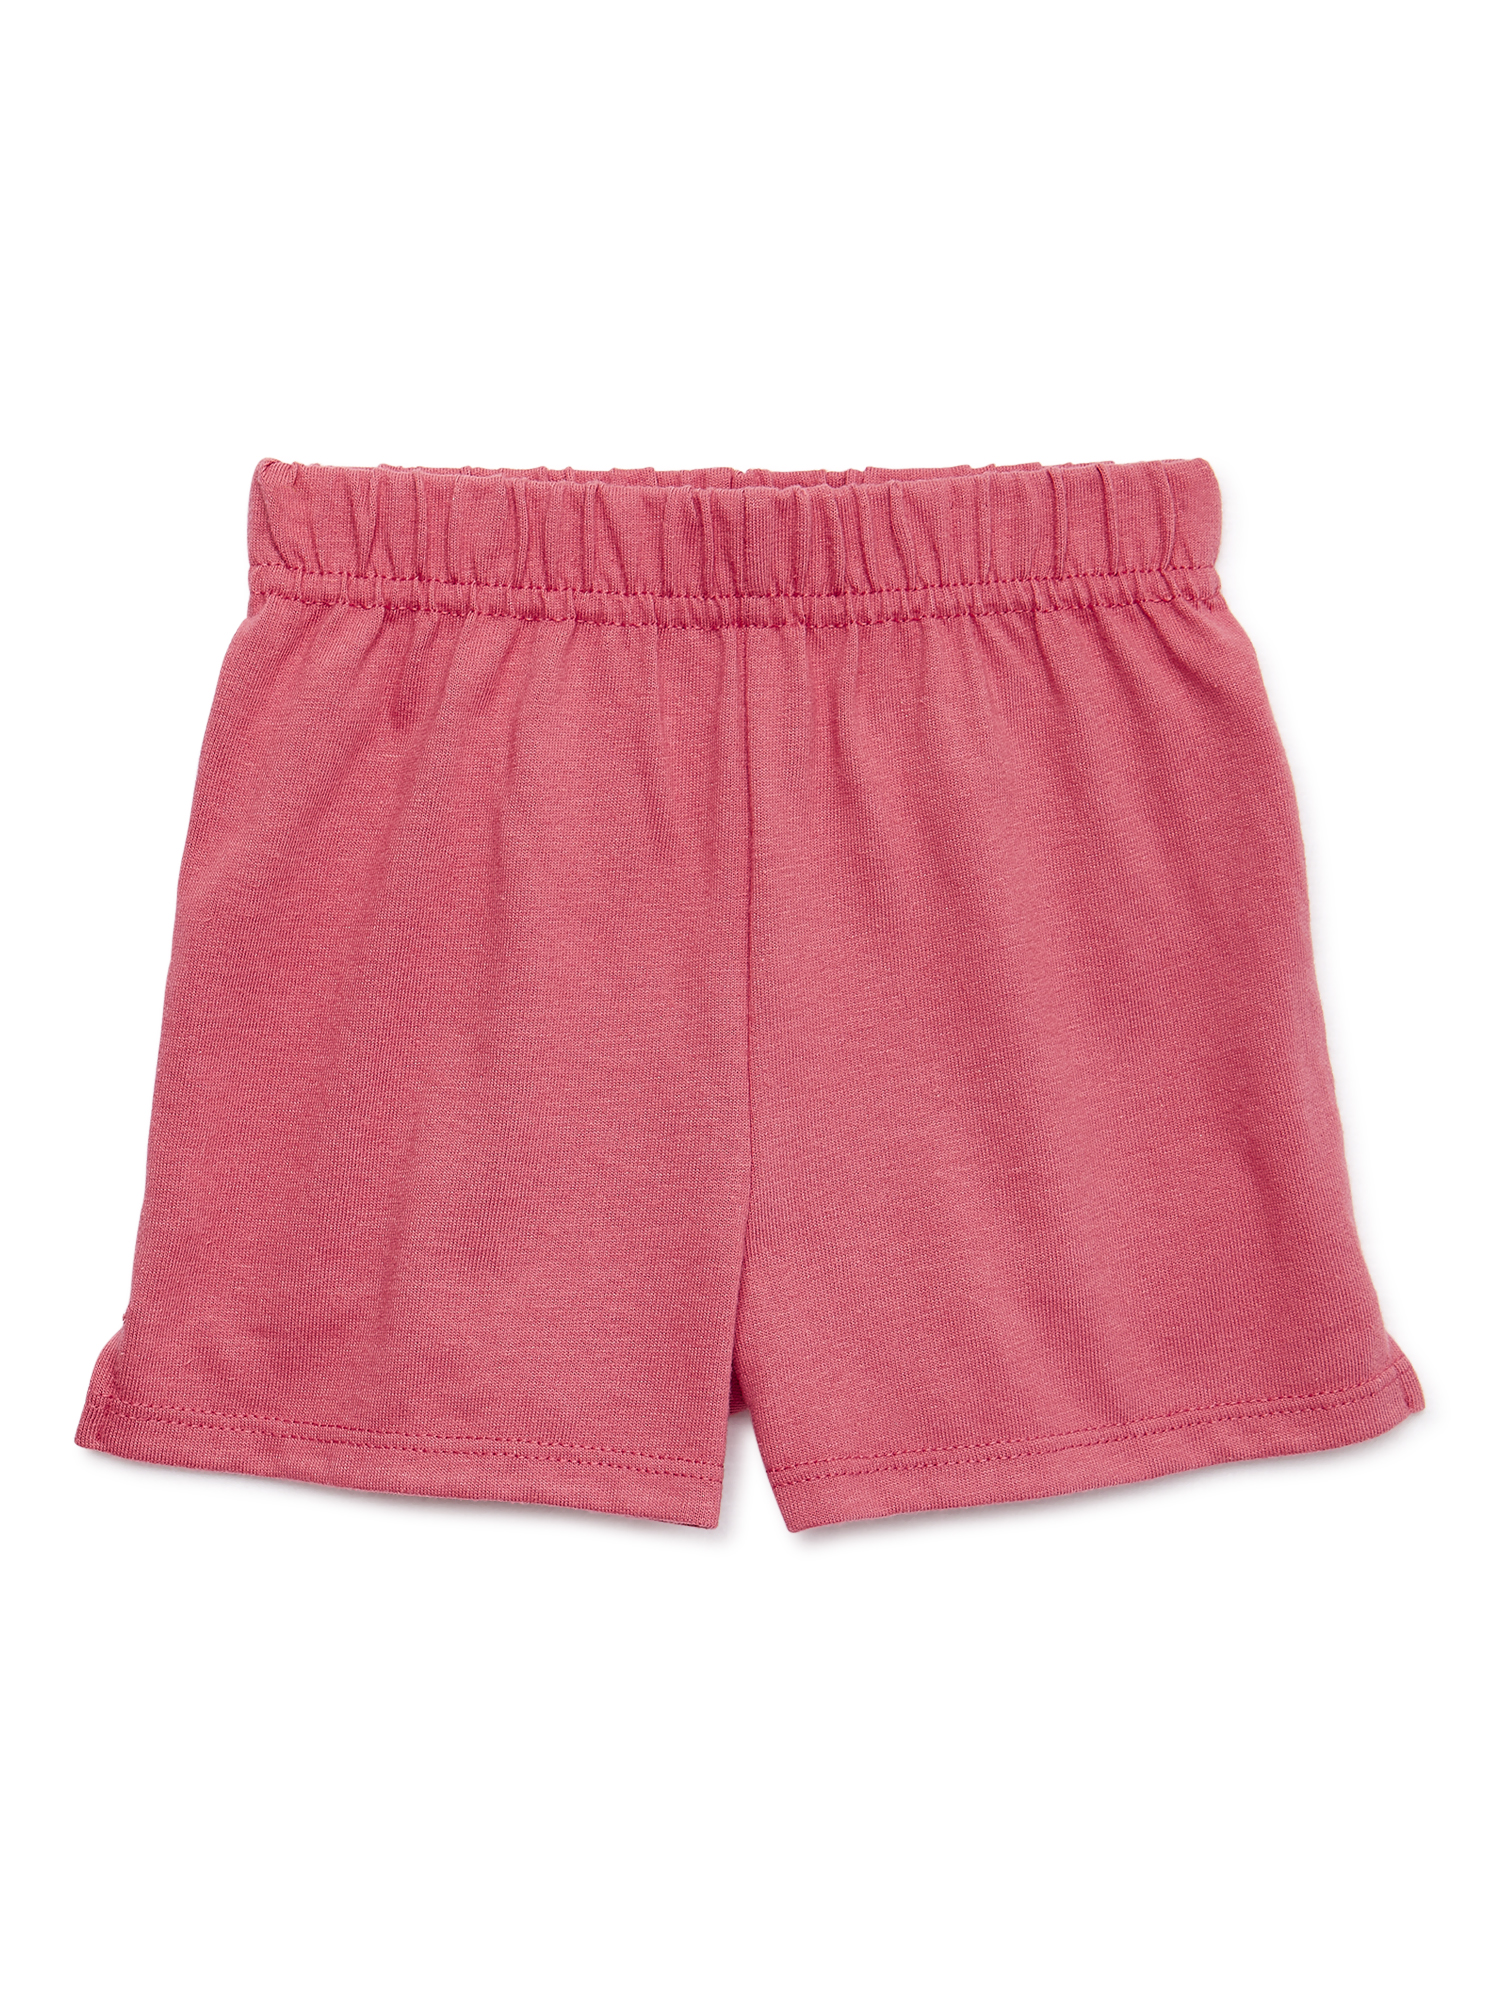 Garanimals Baby and Toddler Girls Jersey Shorts, Sizes 12M-5T - image 1 of 4